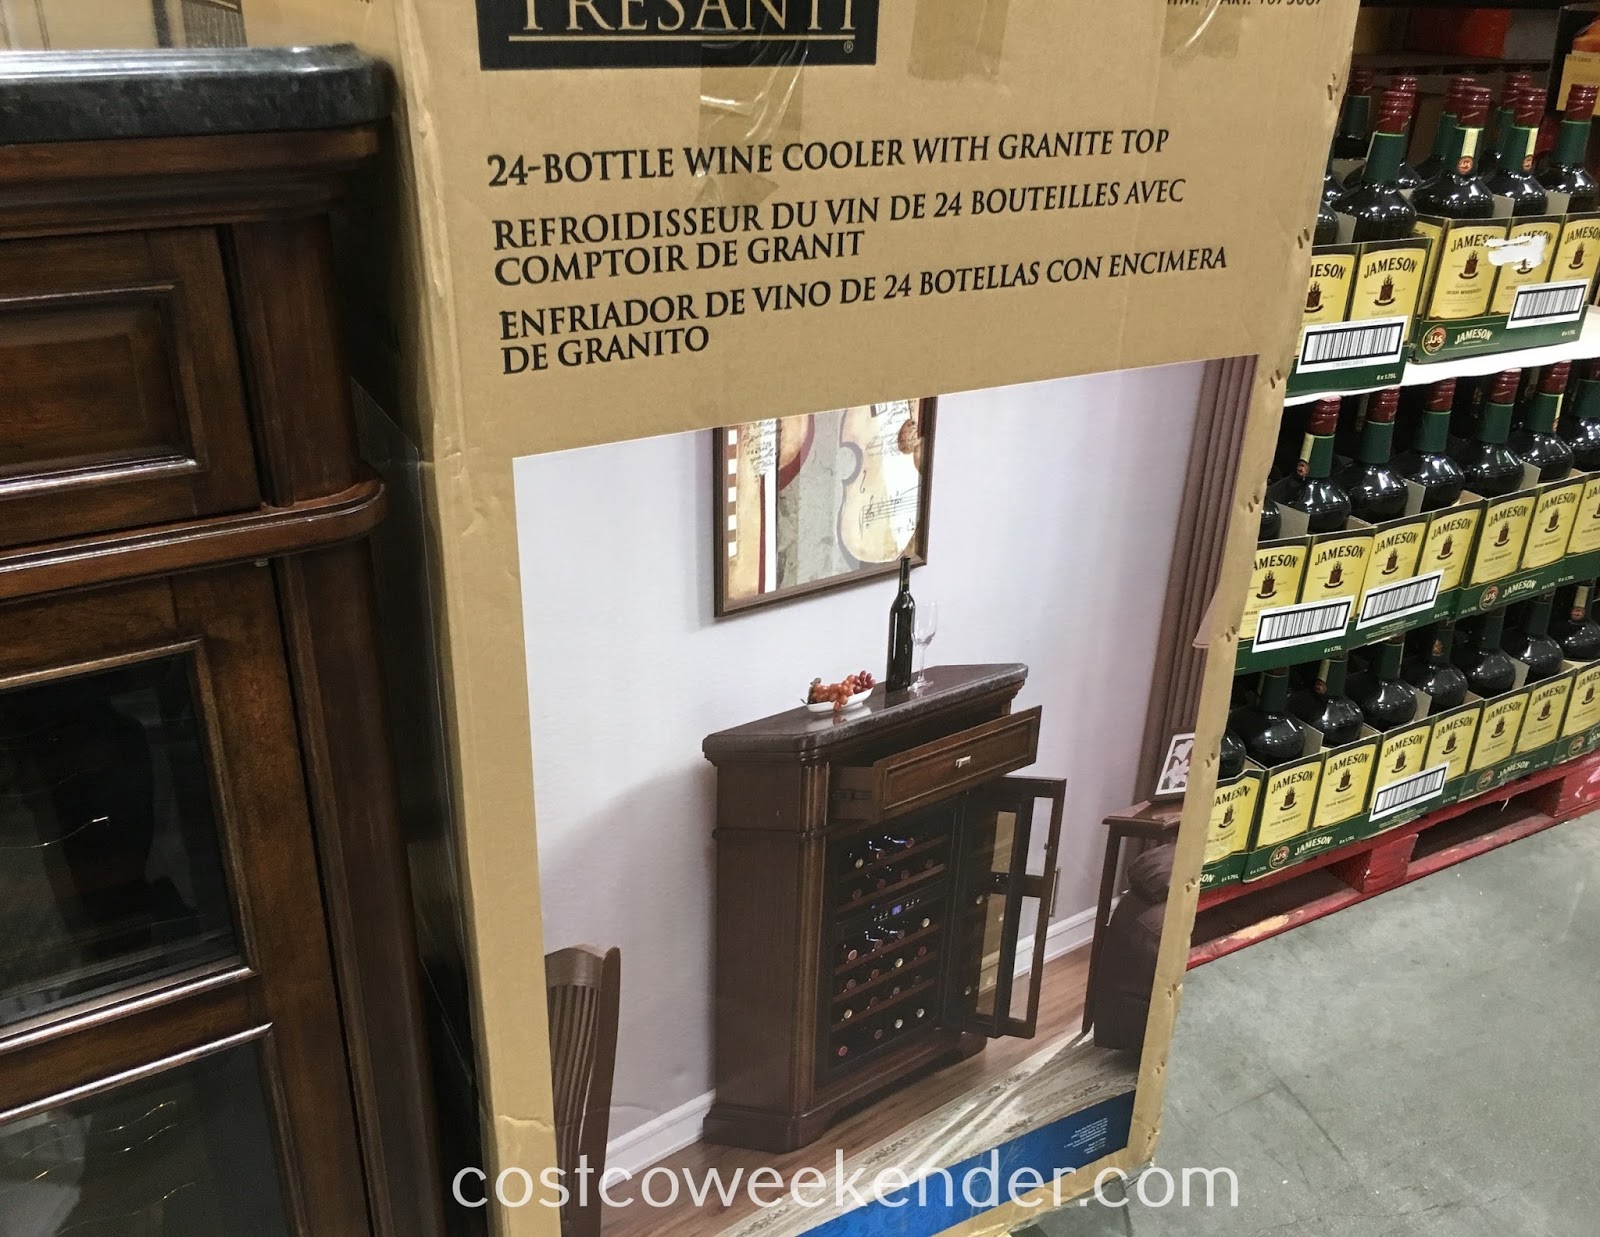 Tresanti 24 Bottle Wine Cooler Cabinet With Granite Top Costco